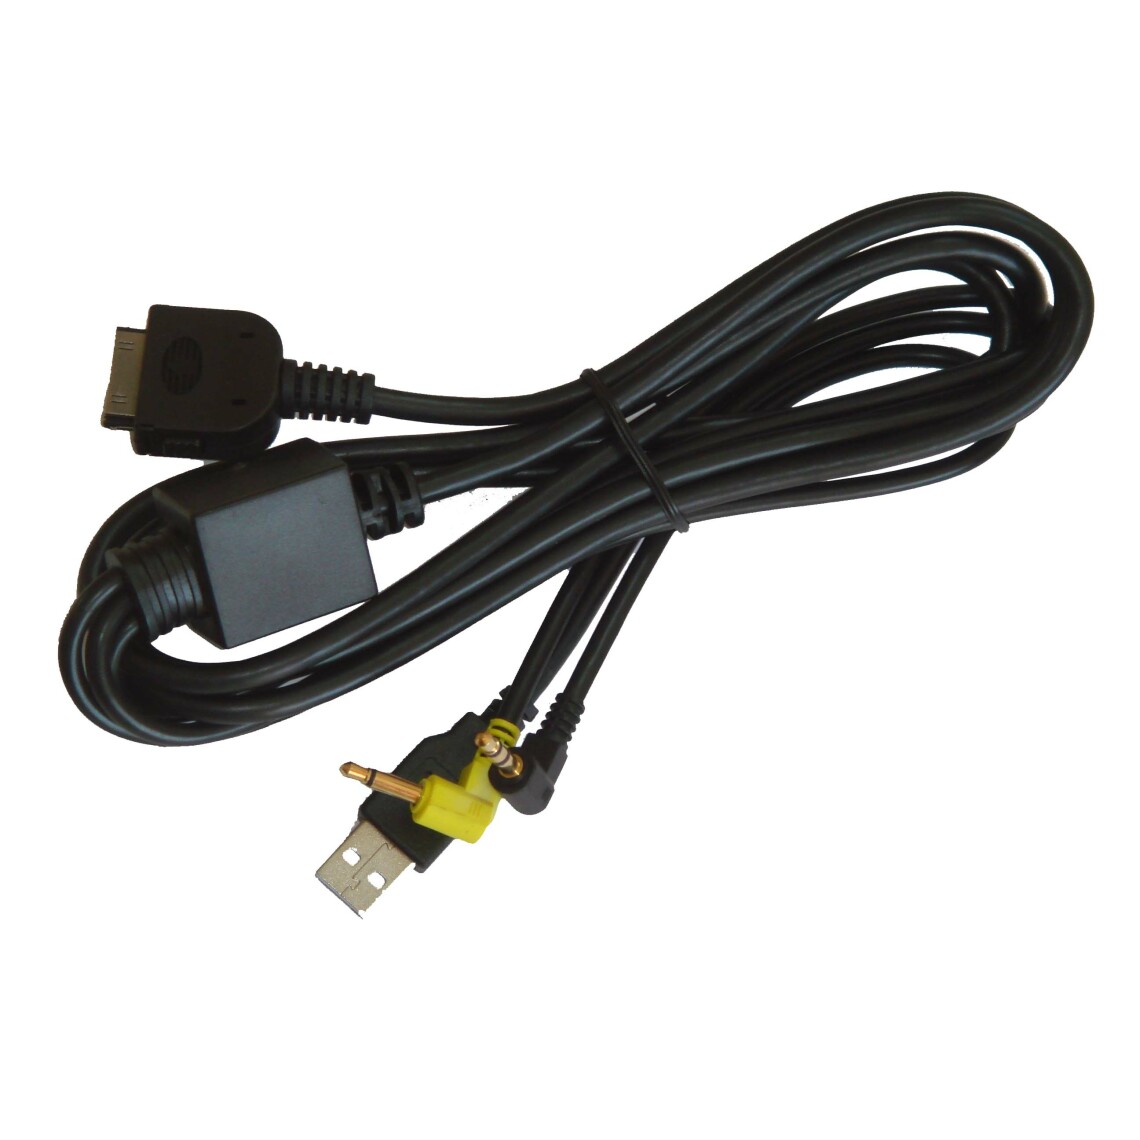 Vhbw - vhbw Câble adaptateur de ligne AUX Radio compatible avec Kenwood DNX8220BT, DNX9240BT, KOS-V1000, KOS-V500, KVT-50DVDRY voiture - USB, prise jack - Alimentation modulaire